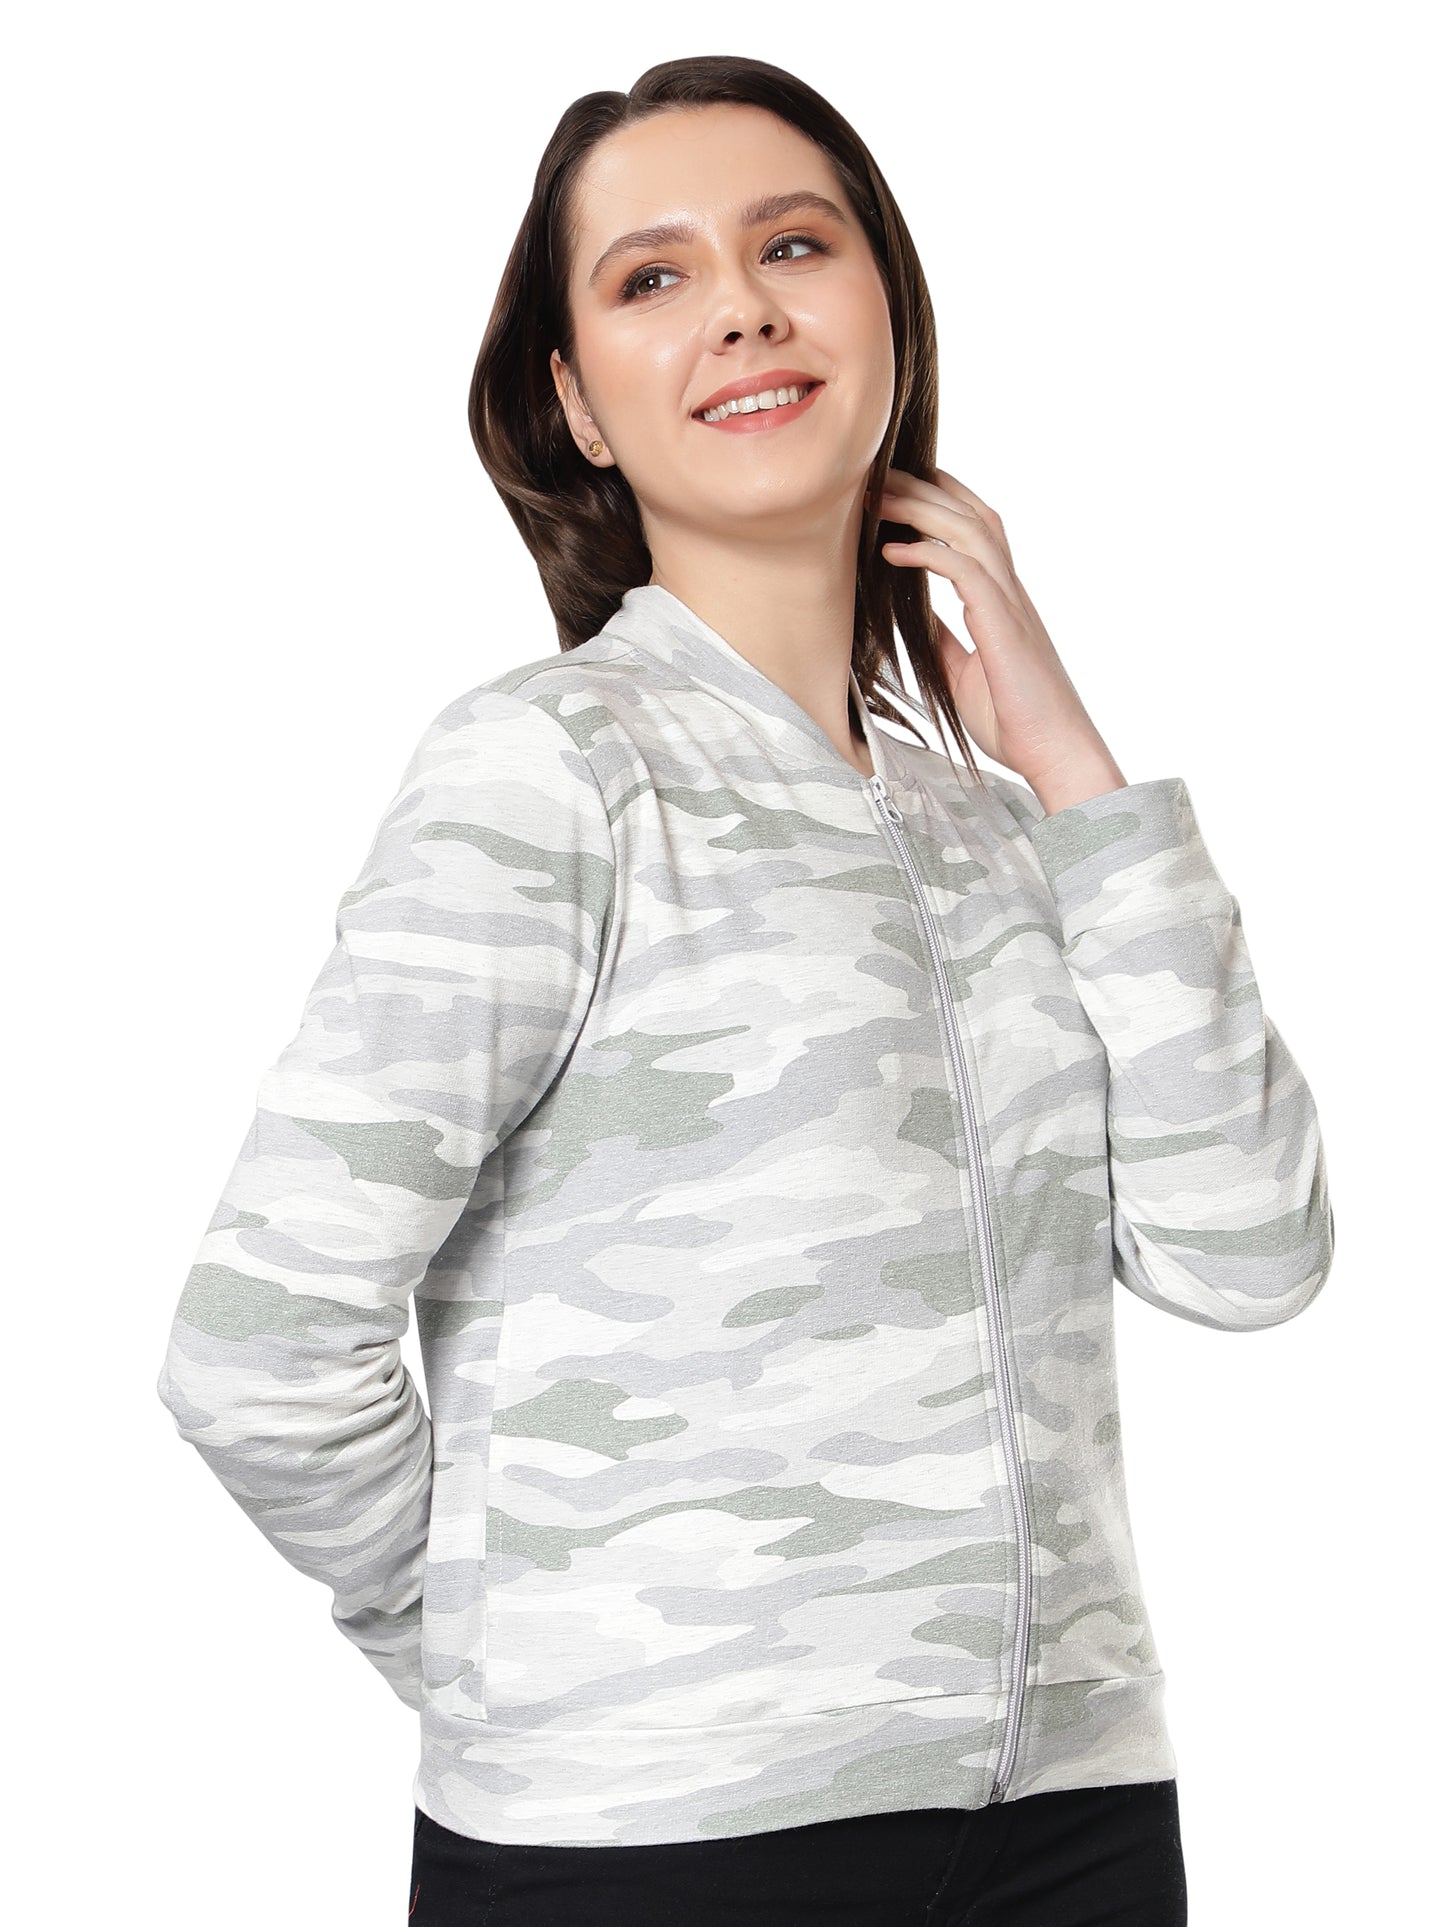 Women Camouflage Printed Grey Jacket